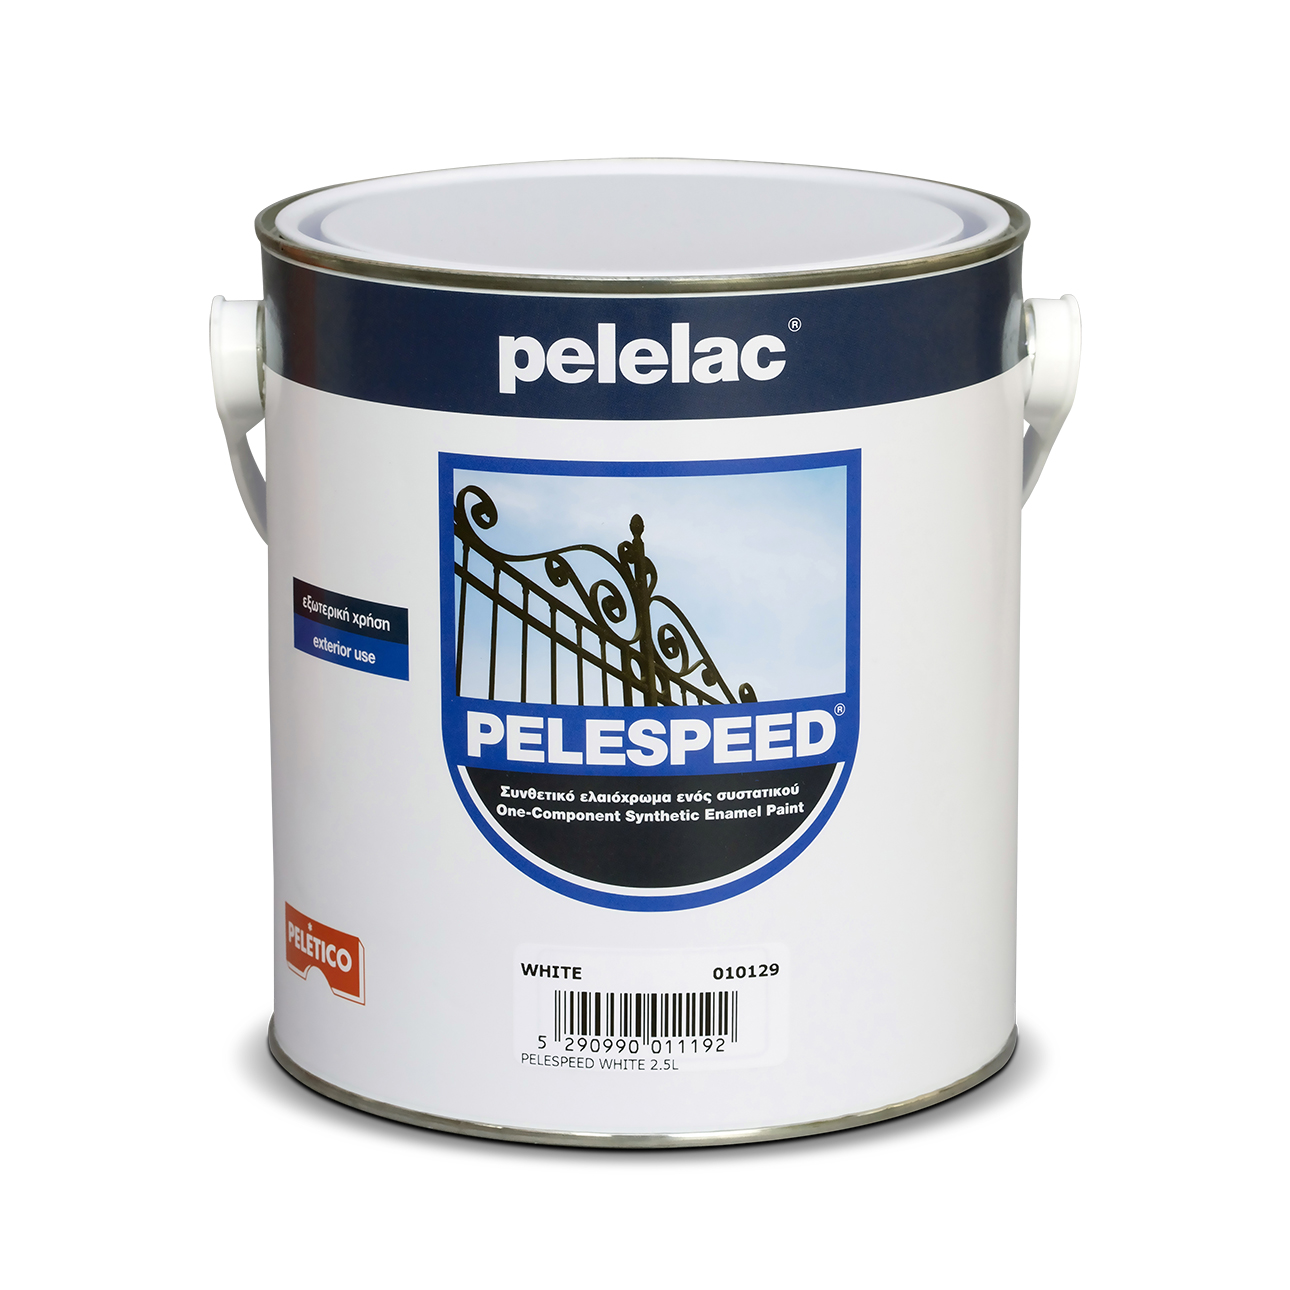 PELELAC PELESPEED® WHITE 2.5L